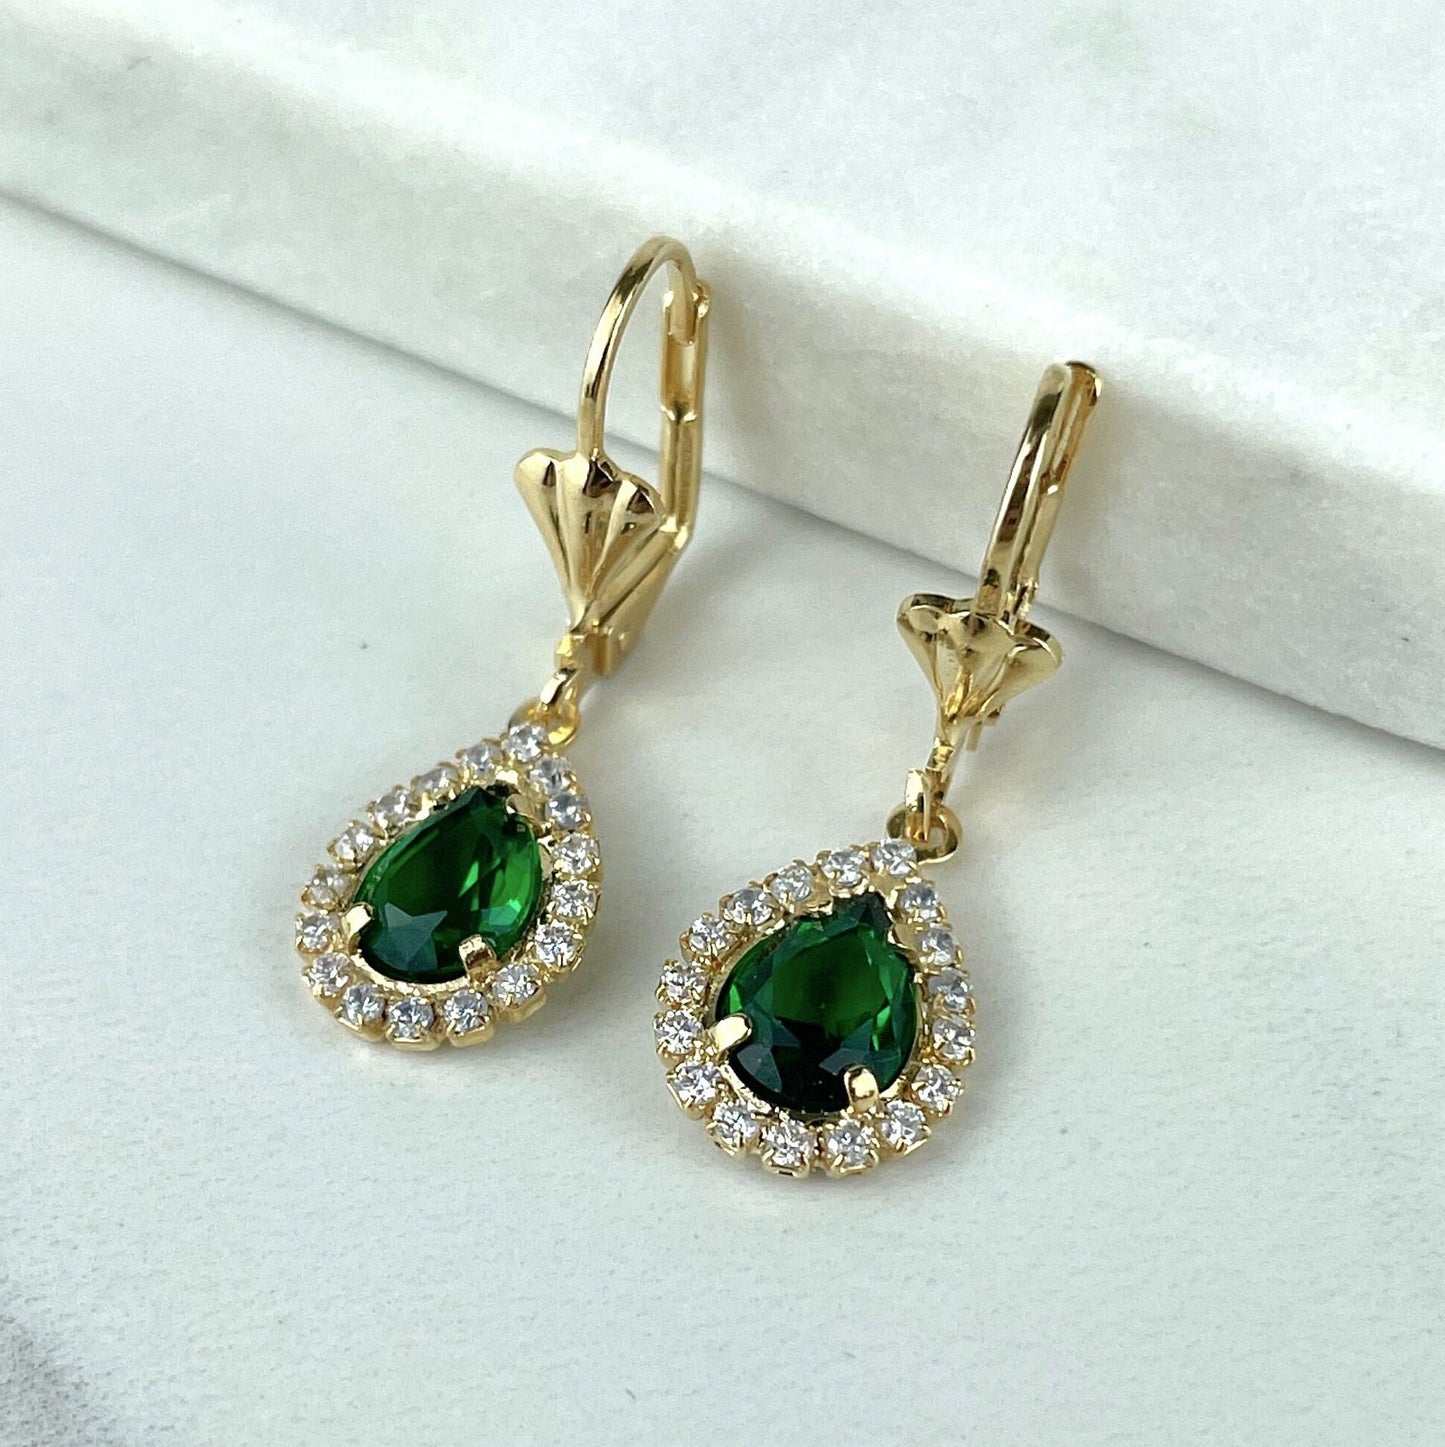 18k Gold Filled Cubic Zirconia Teardrop Dangle Earrings, White, Navy Blue, Green or Black, Wholesale Jewelry Making Supplies